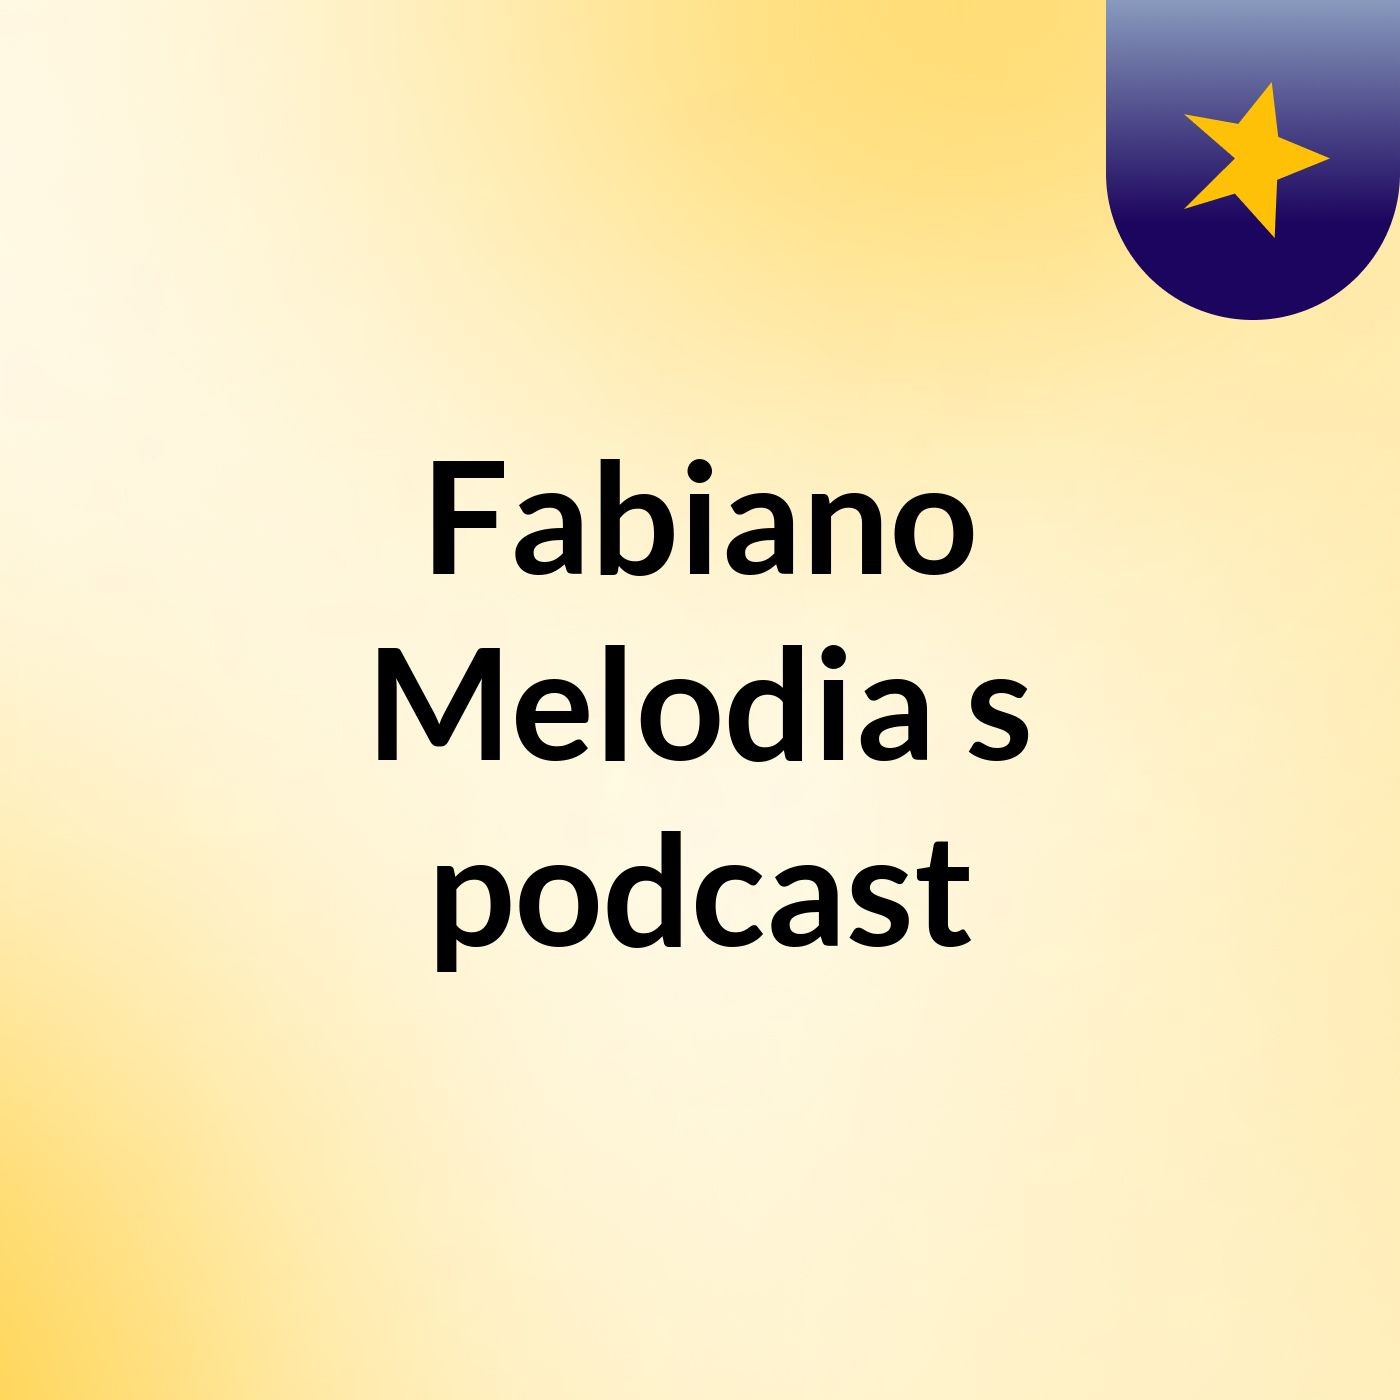 Fabiano Melodia's podcast